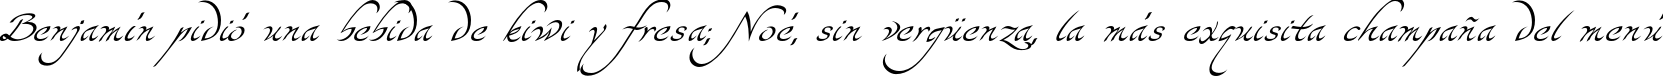 Пример написания шрифтом Yevida текста на испанском